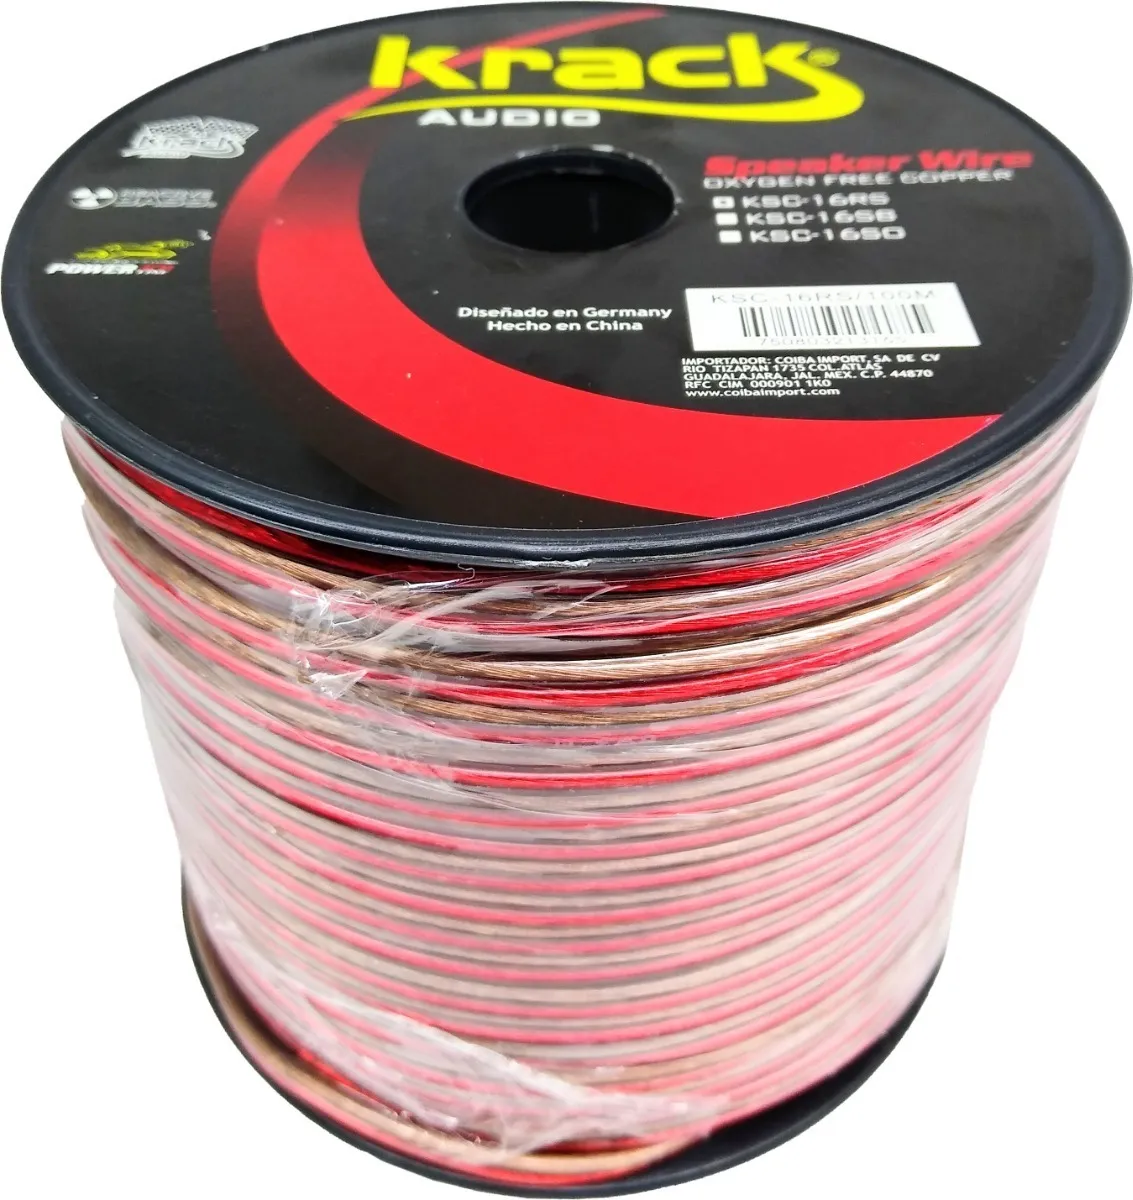 Cable Krack Audio, Flexible, para Bocina, Libre de Oxígeno, Calibre 16AWG - Rojo/Humo
[KSCF-16RS]